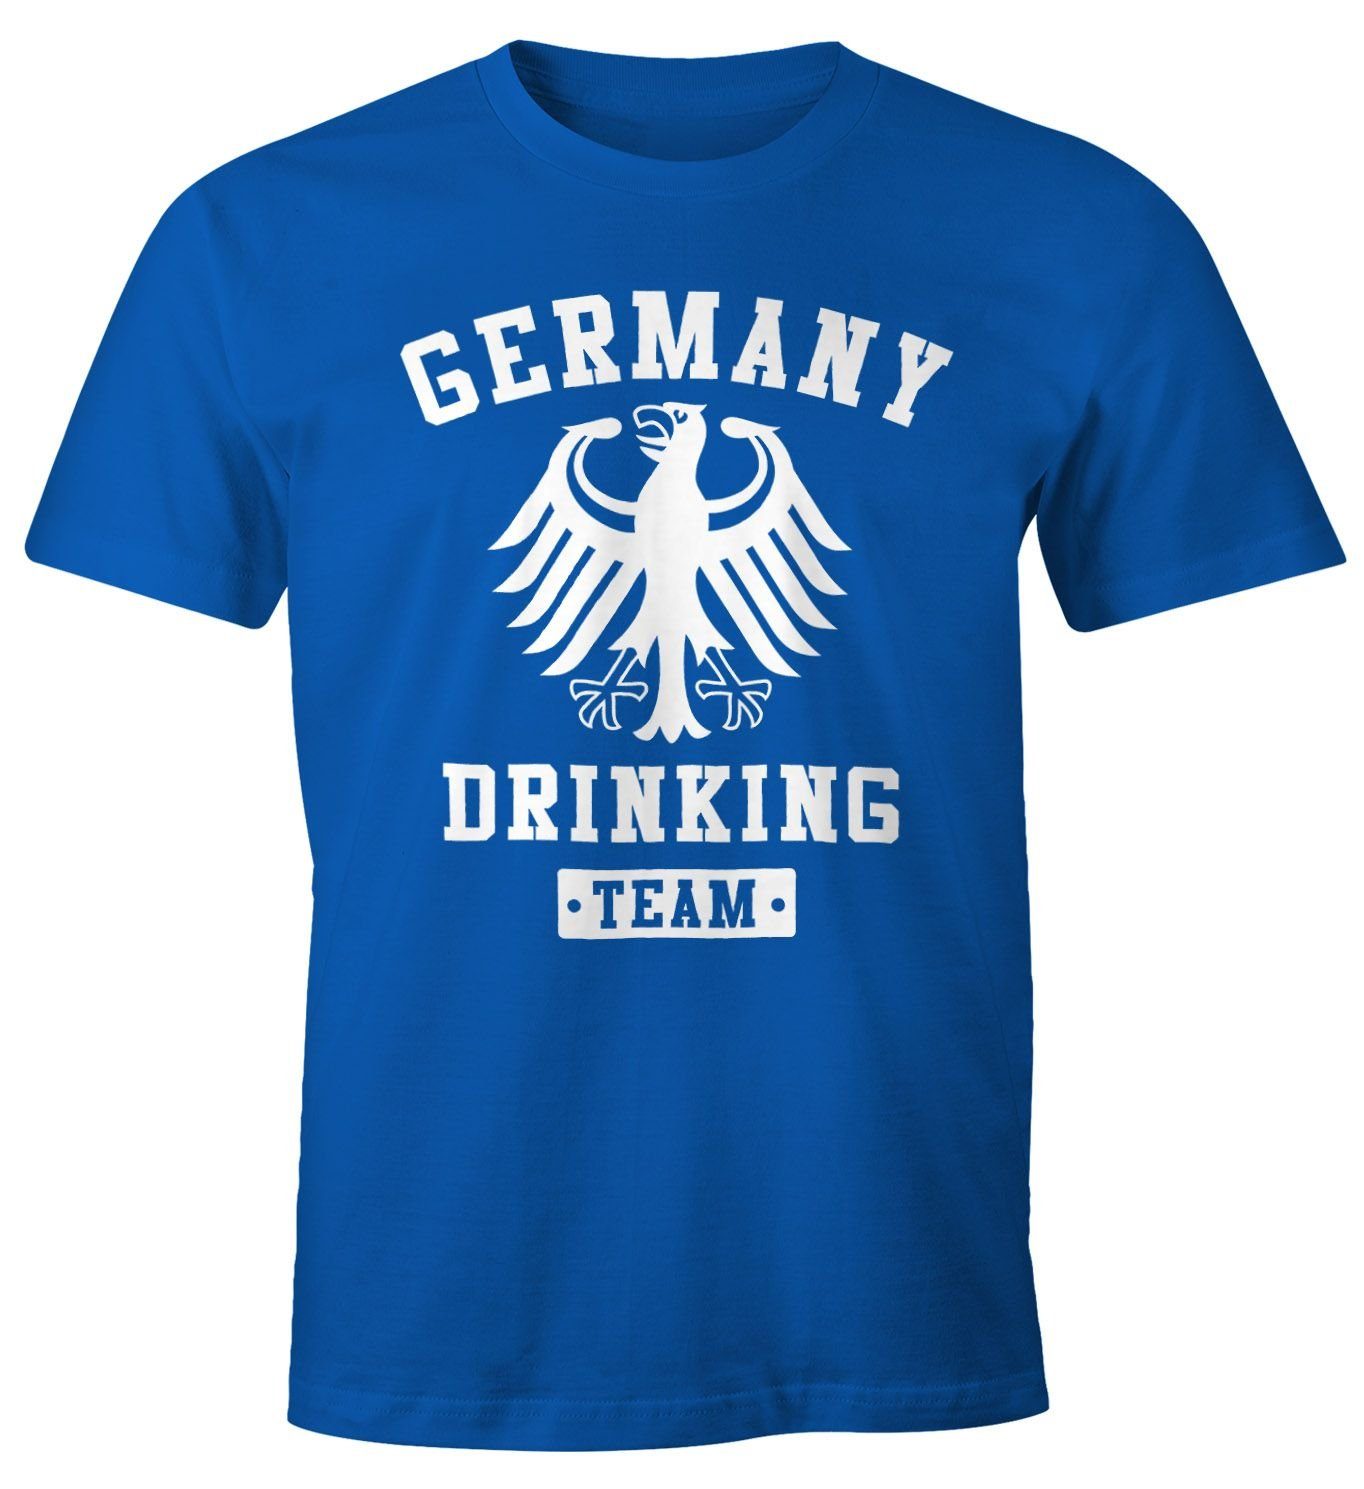 MoonWorks Print-Shirt Deutschland Herren T-Shirt Germany Drinking Team Bier Adler Fun-Shirt Moonworks® mit Print blau